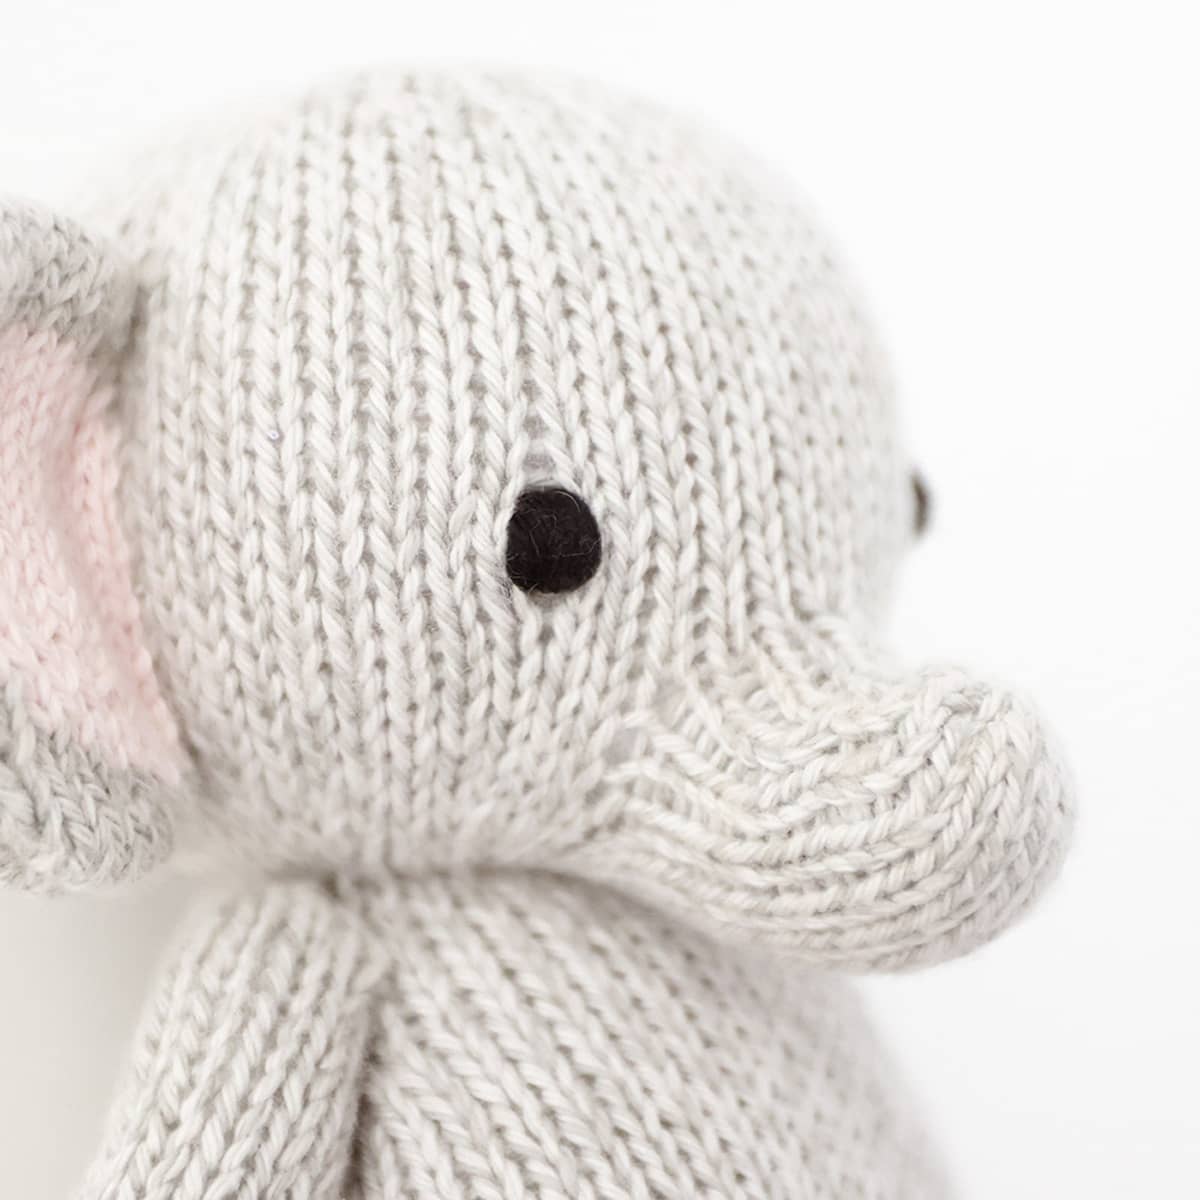 Cuddle + Kind Hand-Knit Doll - Baby Elephant